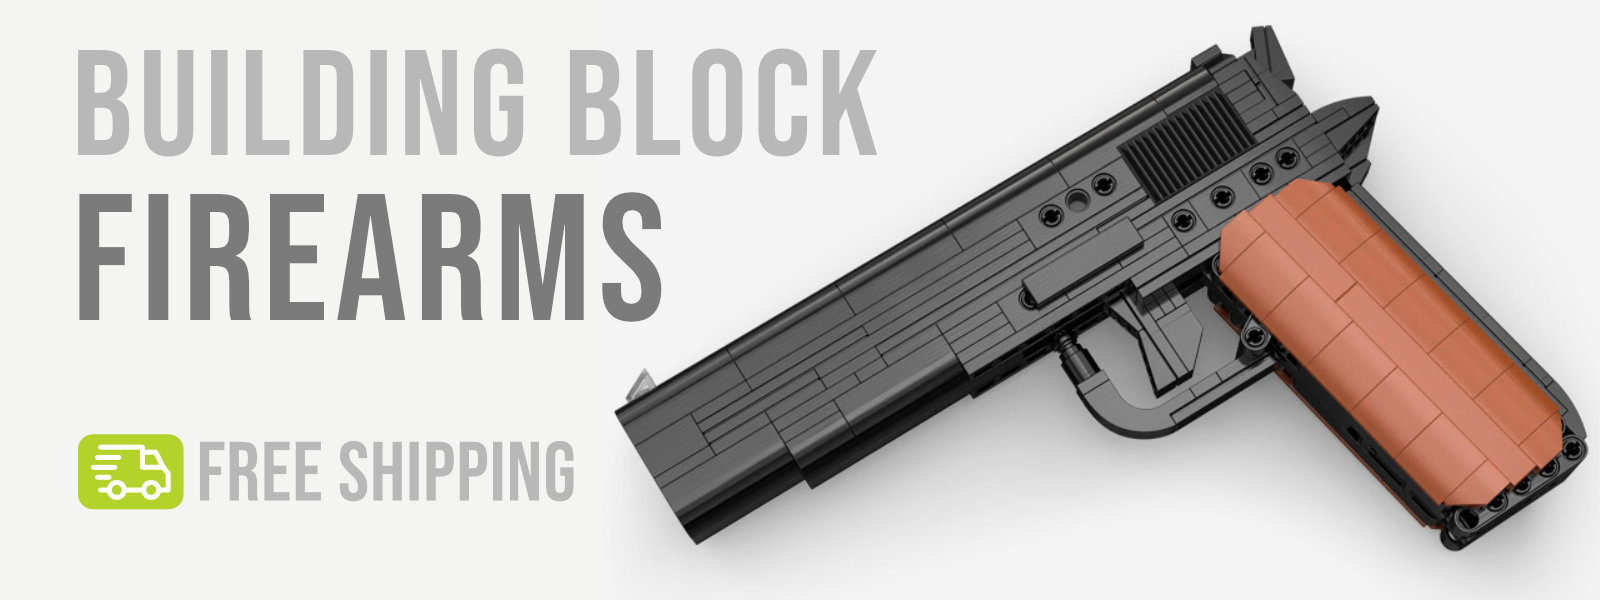 Slick Bricks - Building Block Guns and Military Toys